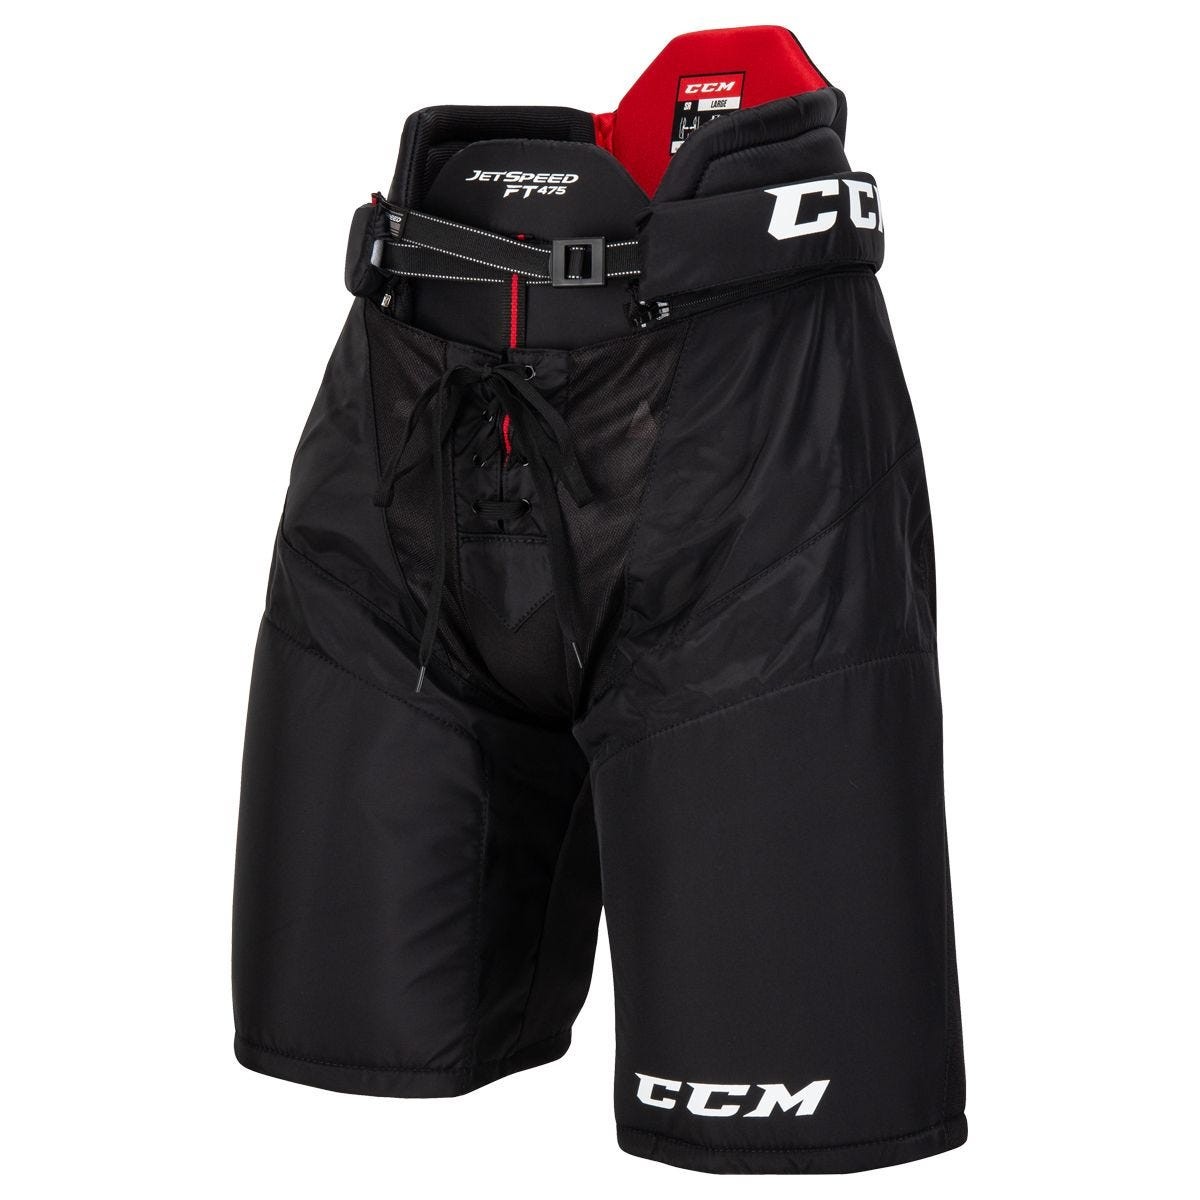 CCM Jetspeed FT475 Junior Ice Hockey Pants